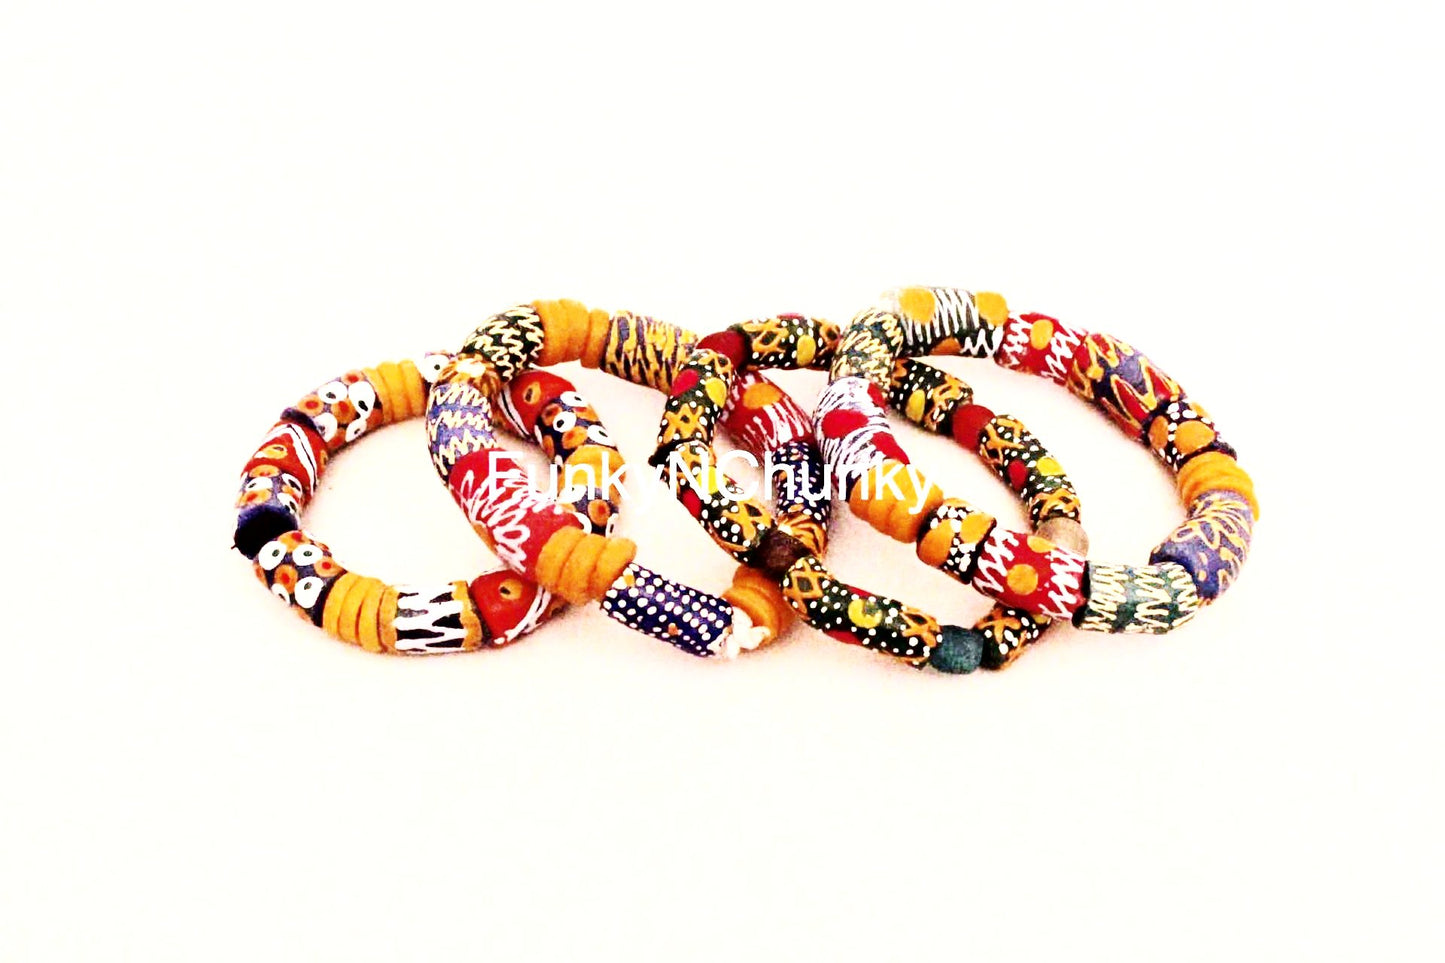 Glass bead bracelet - Traditional